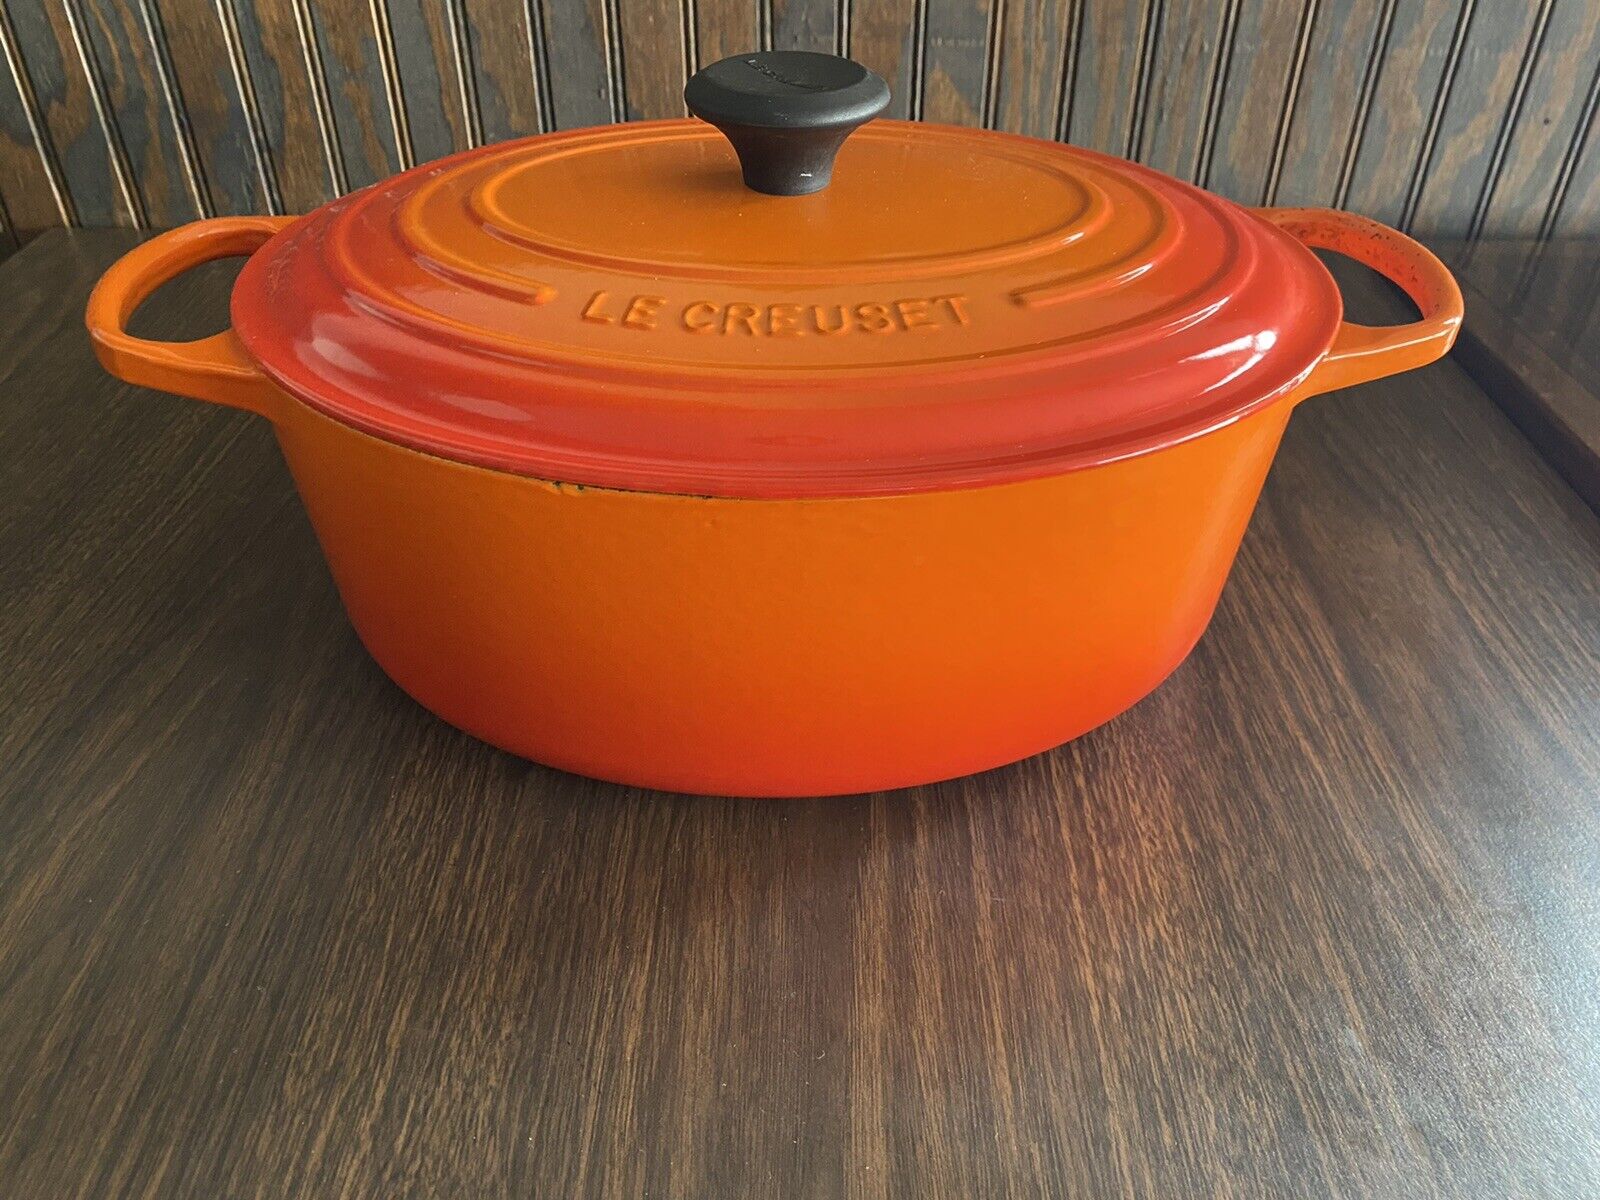 Le Creuset Enameled Cast Iron Dutch Oven Orange Red Ombre